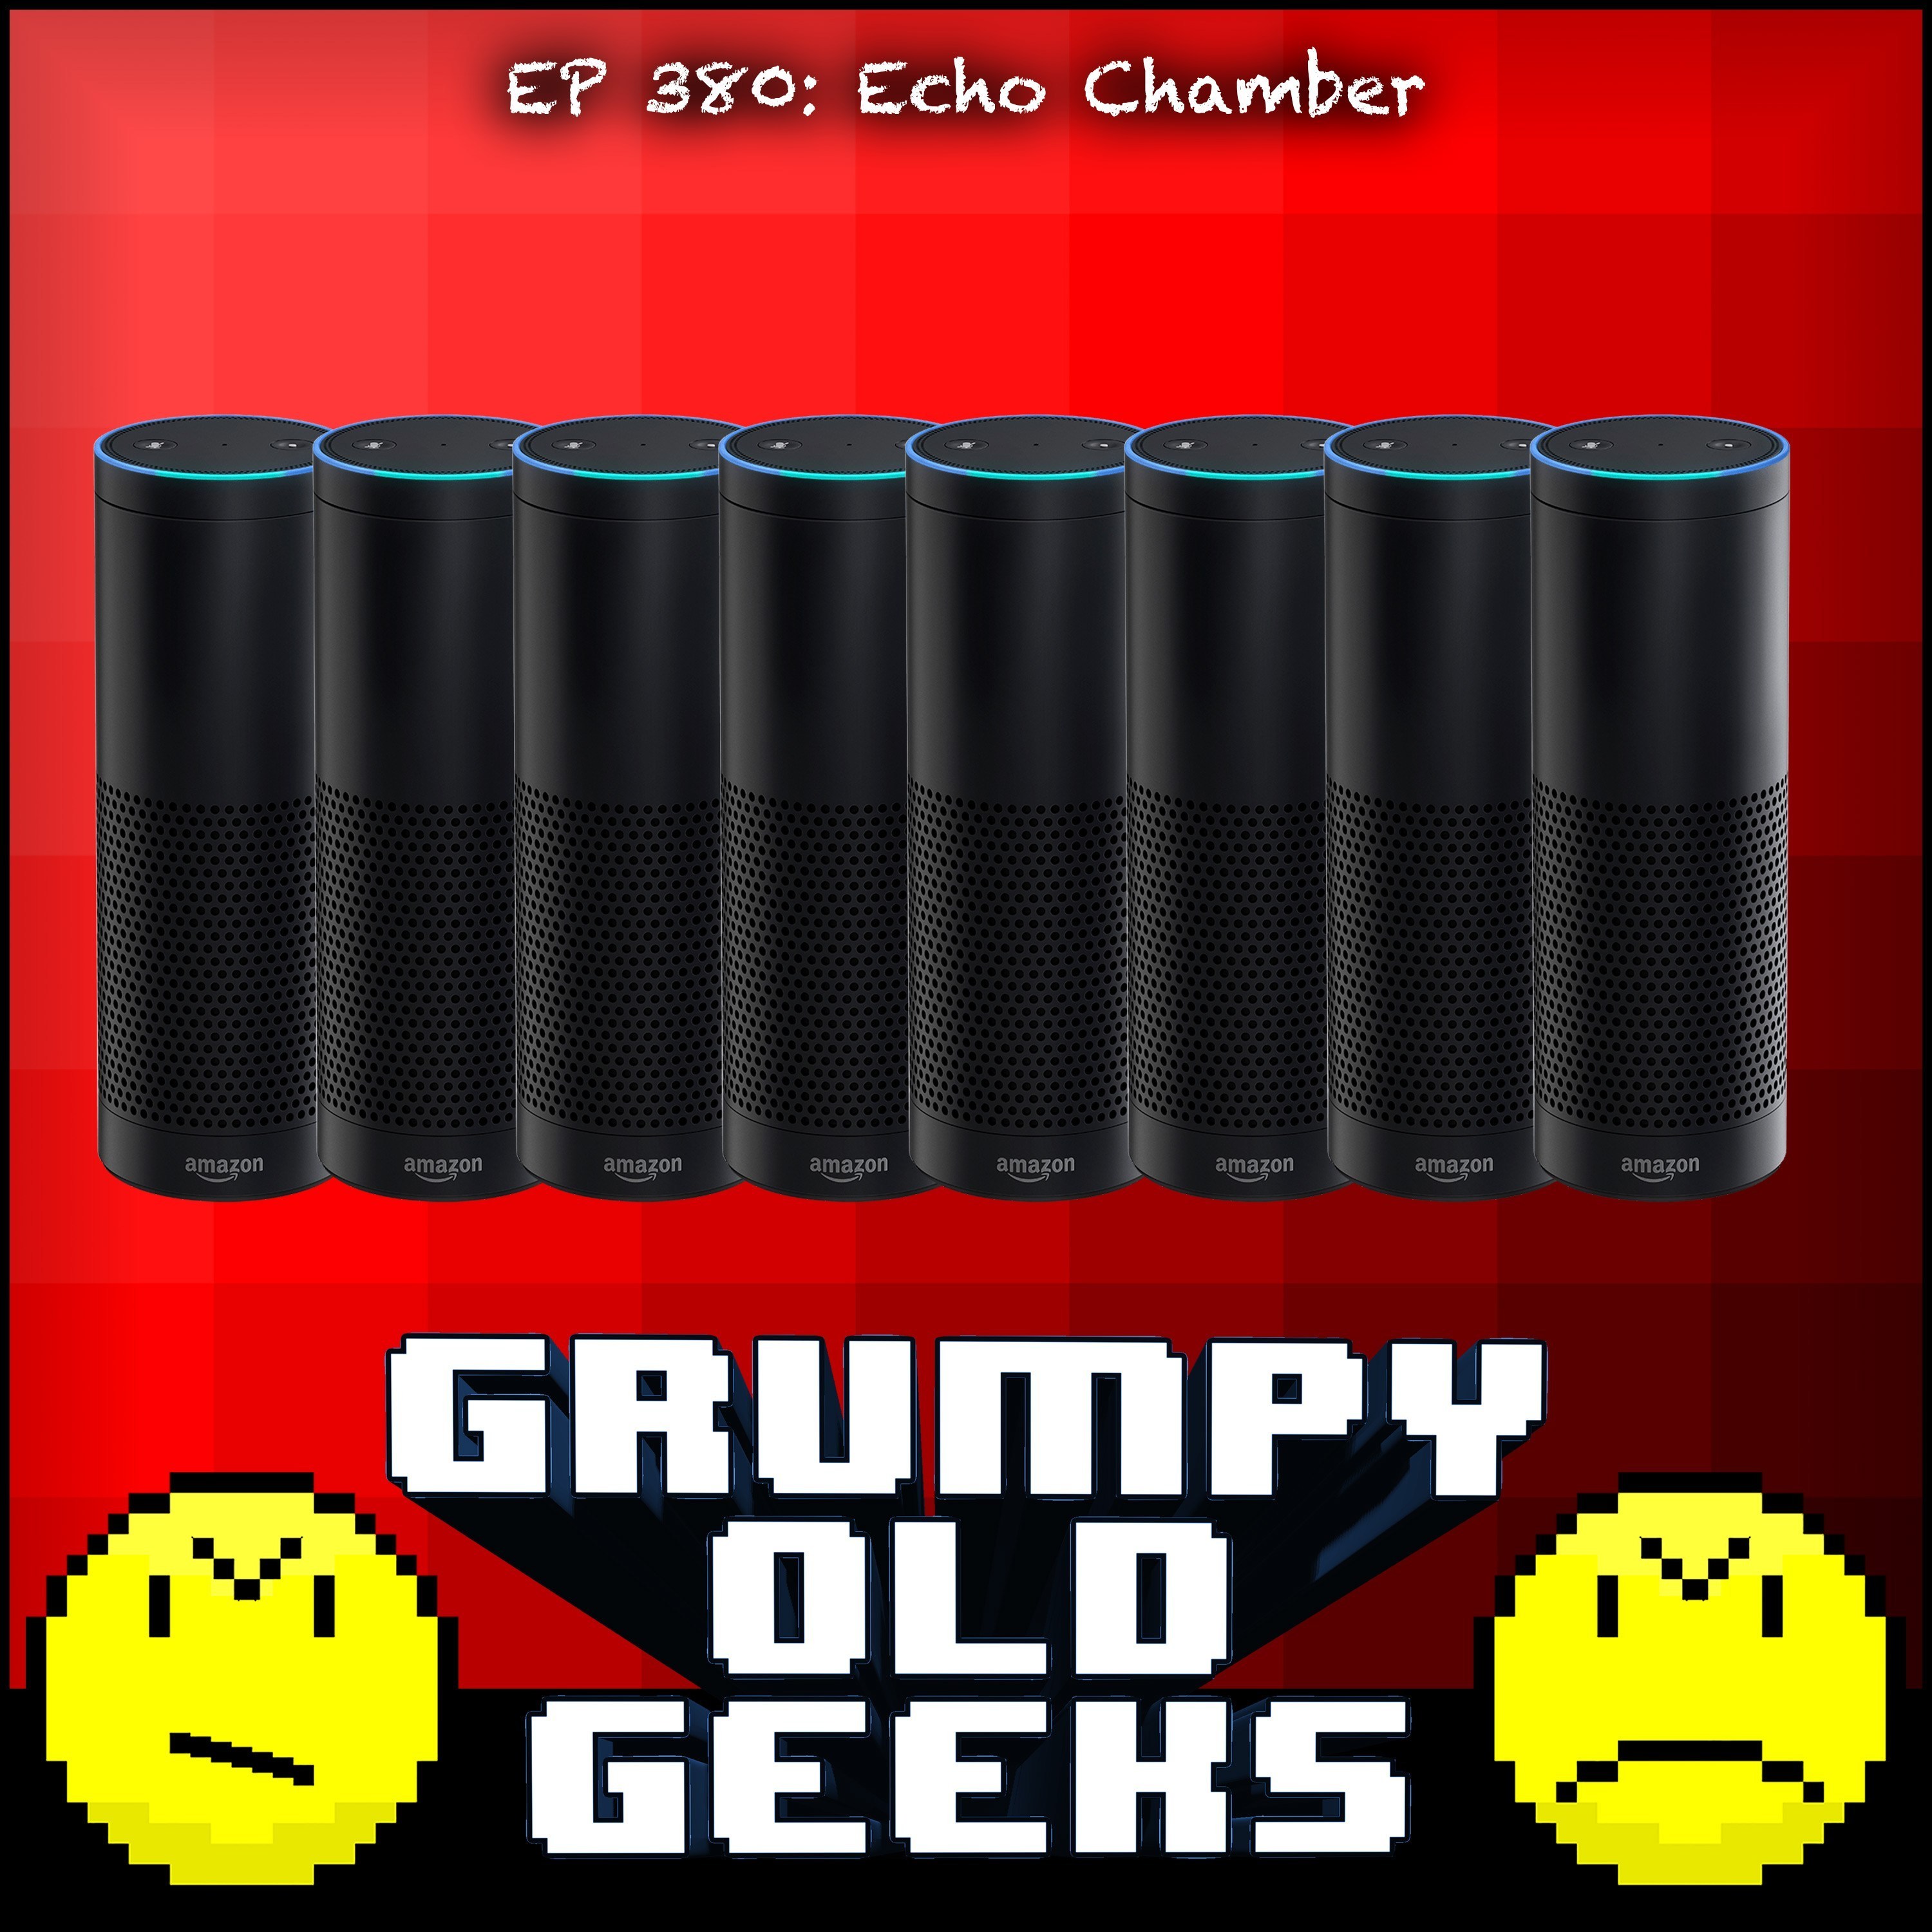 380: Echo Chamber